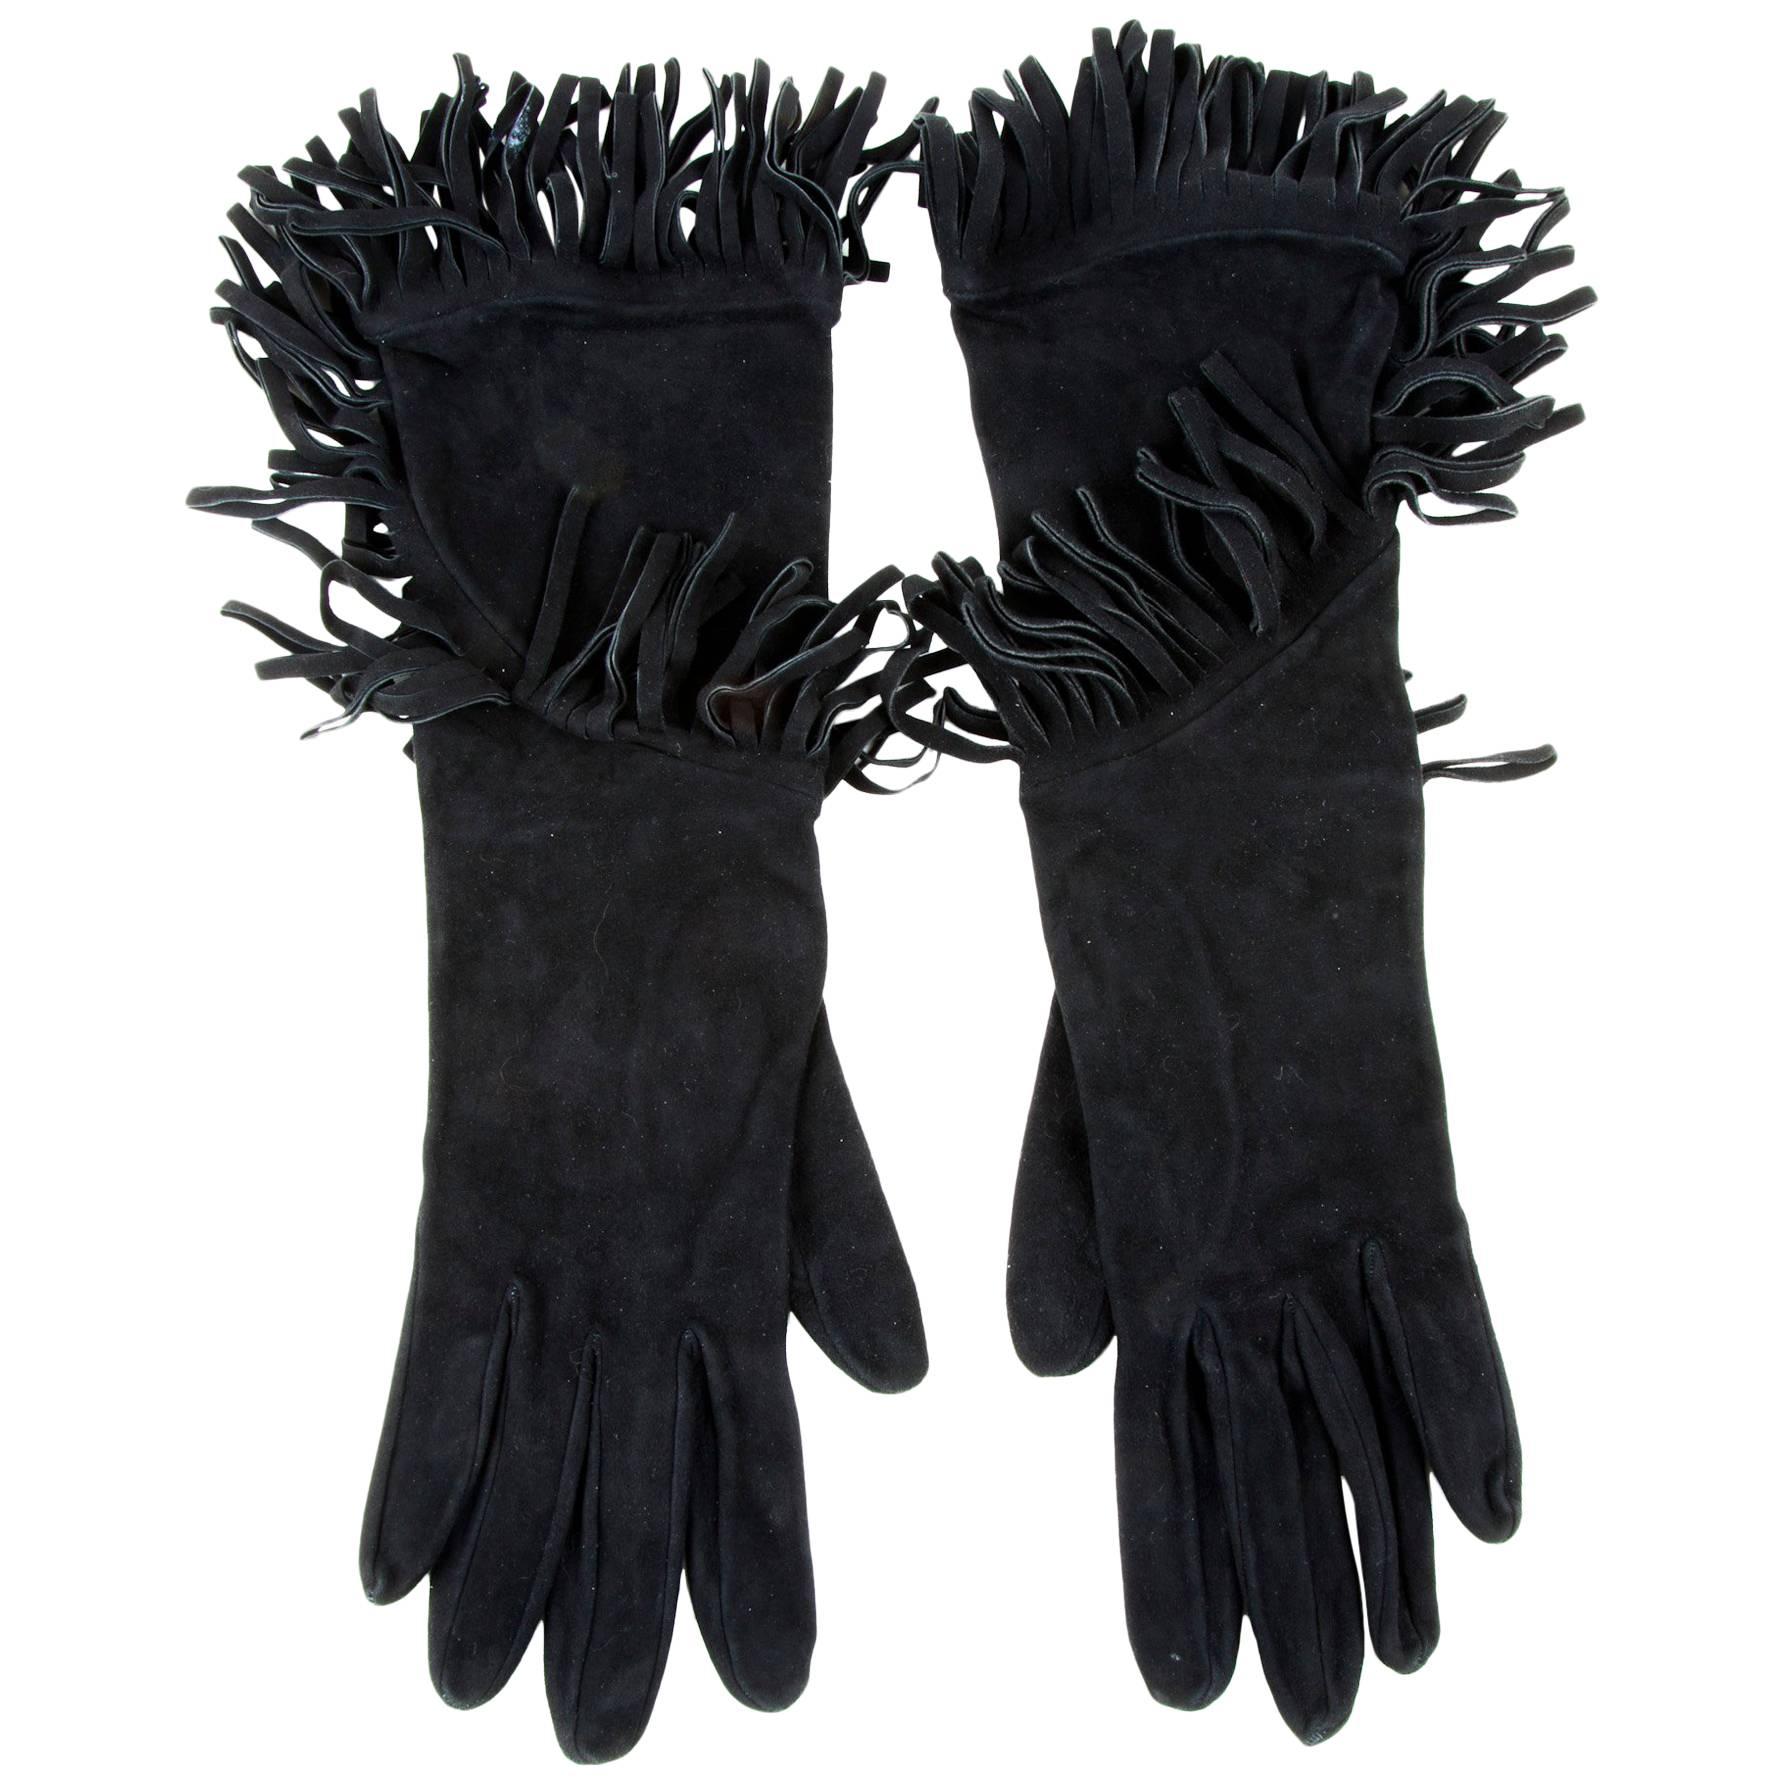 HERMES Mid-Length Fringed Gloves in Black Suede Size 7.5 EU